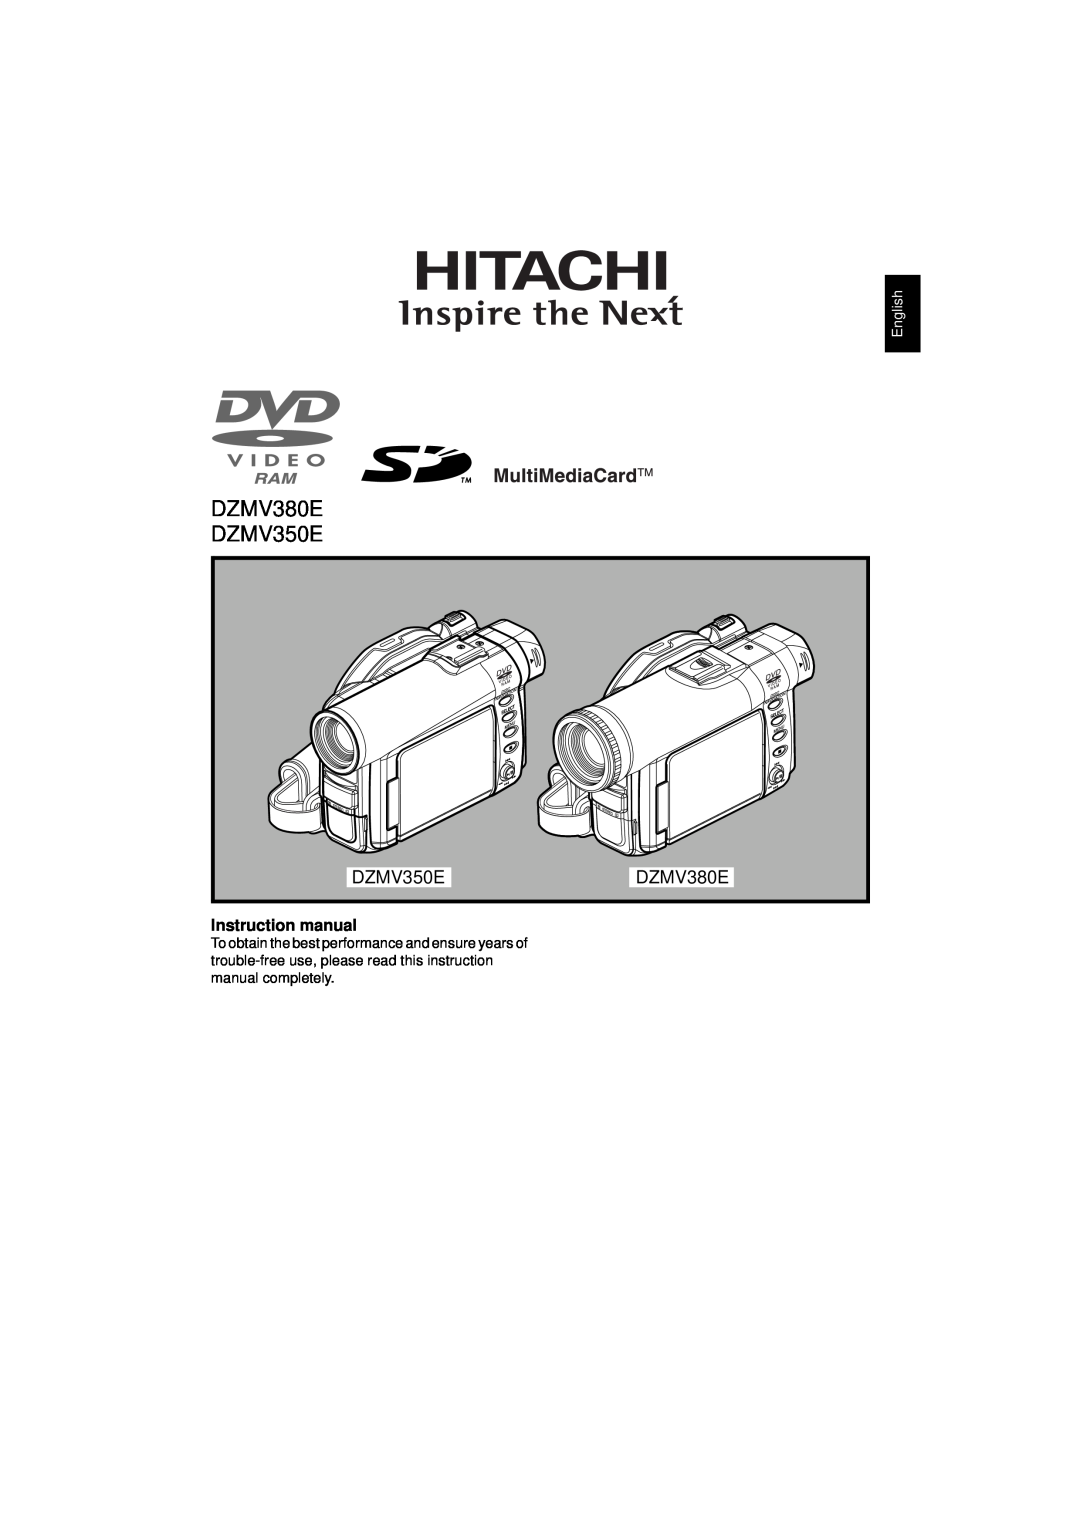 Hitachi DZMV350E instruction manual Instruction manual, English, DZMV380E 